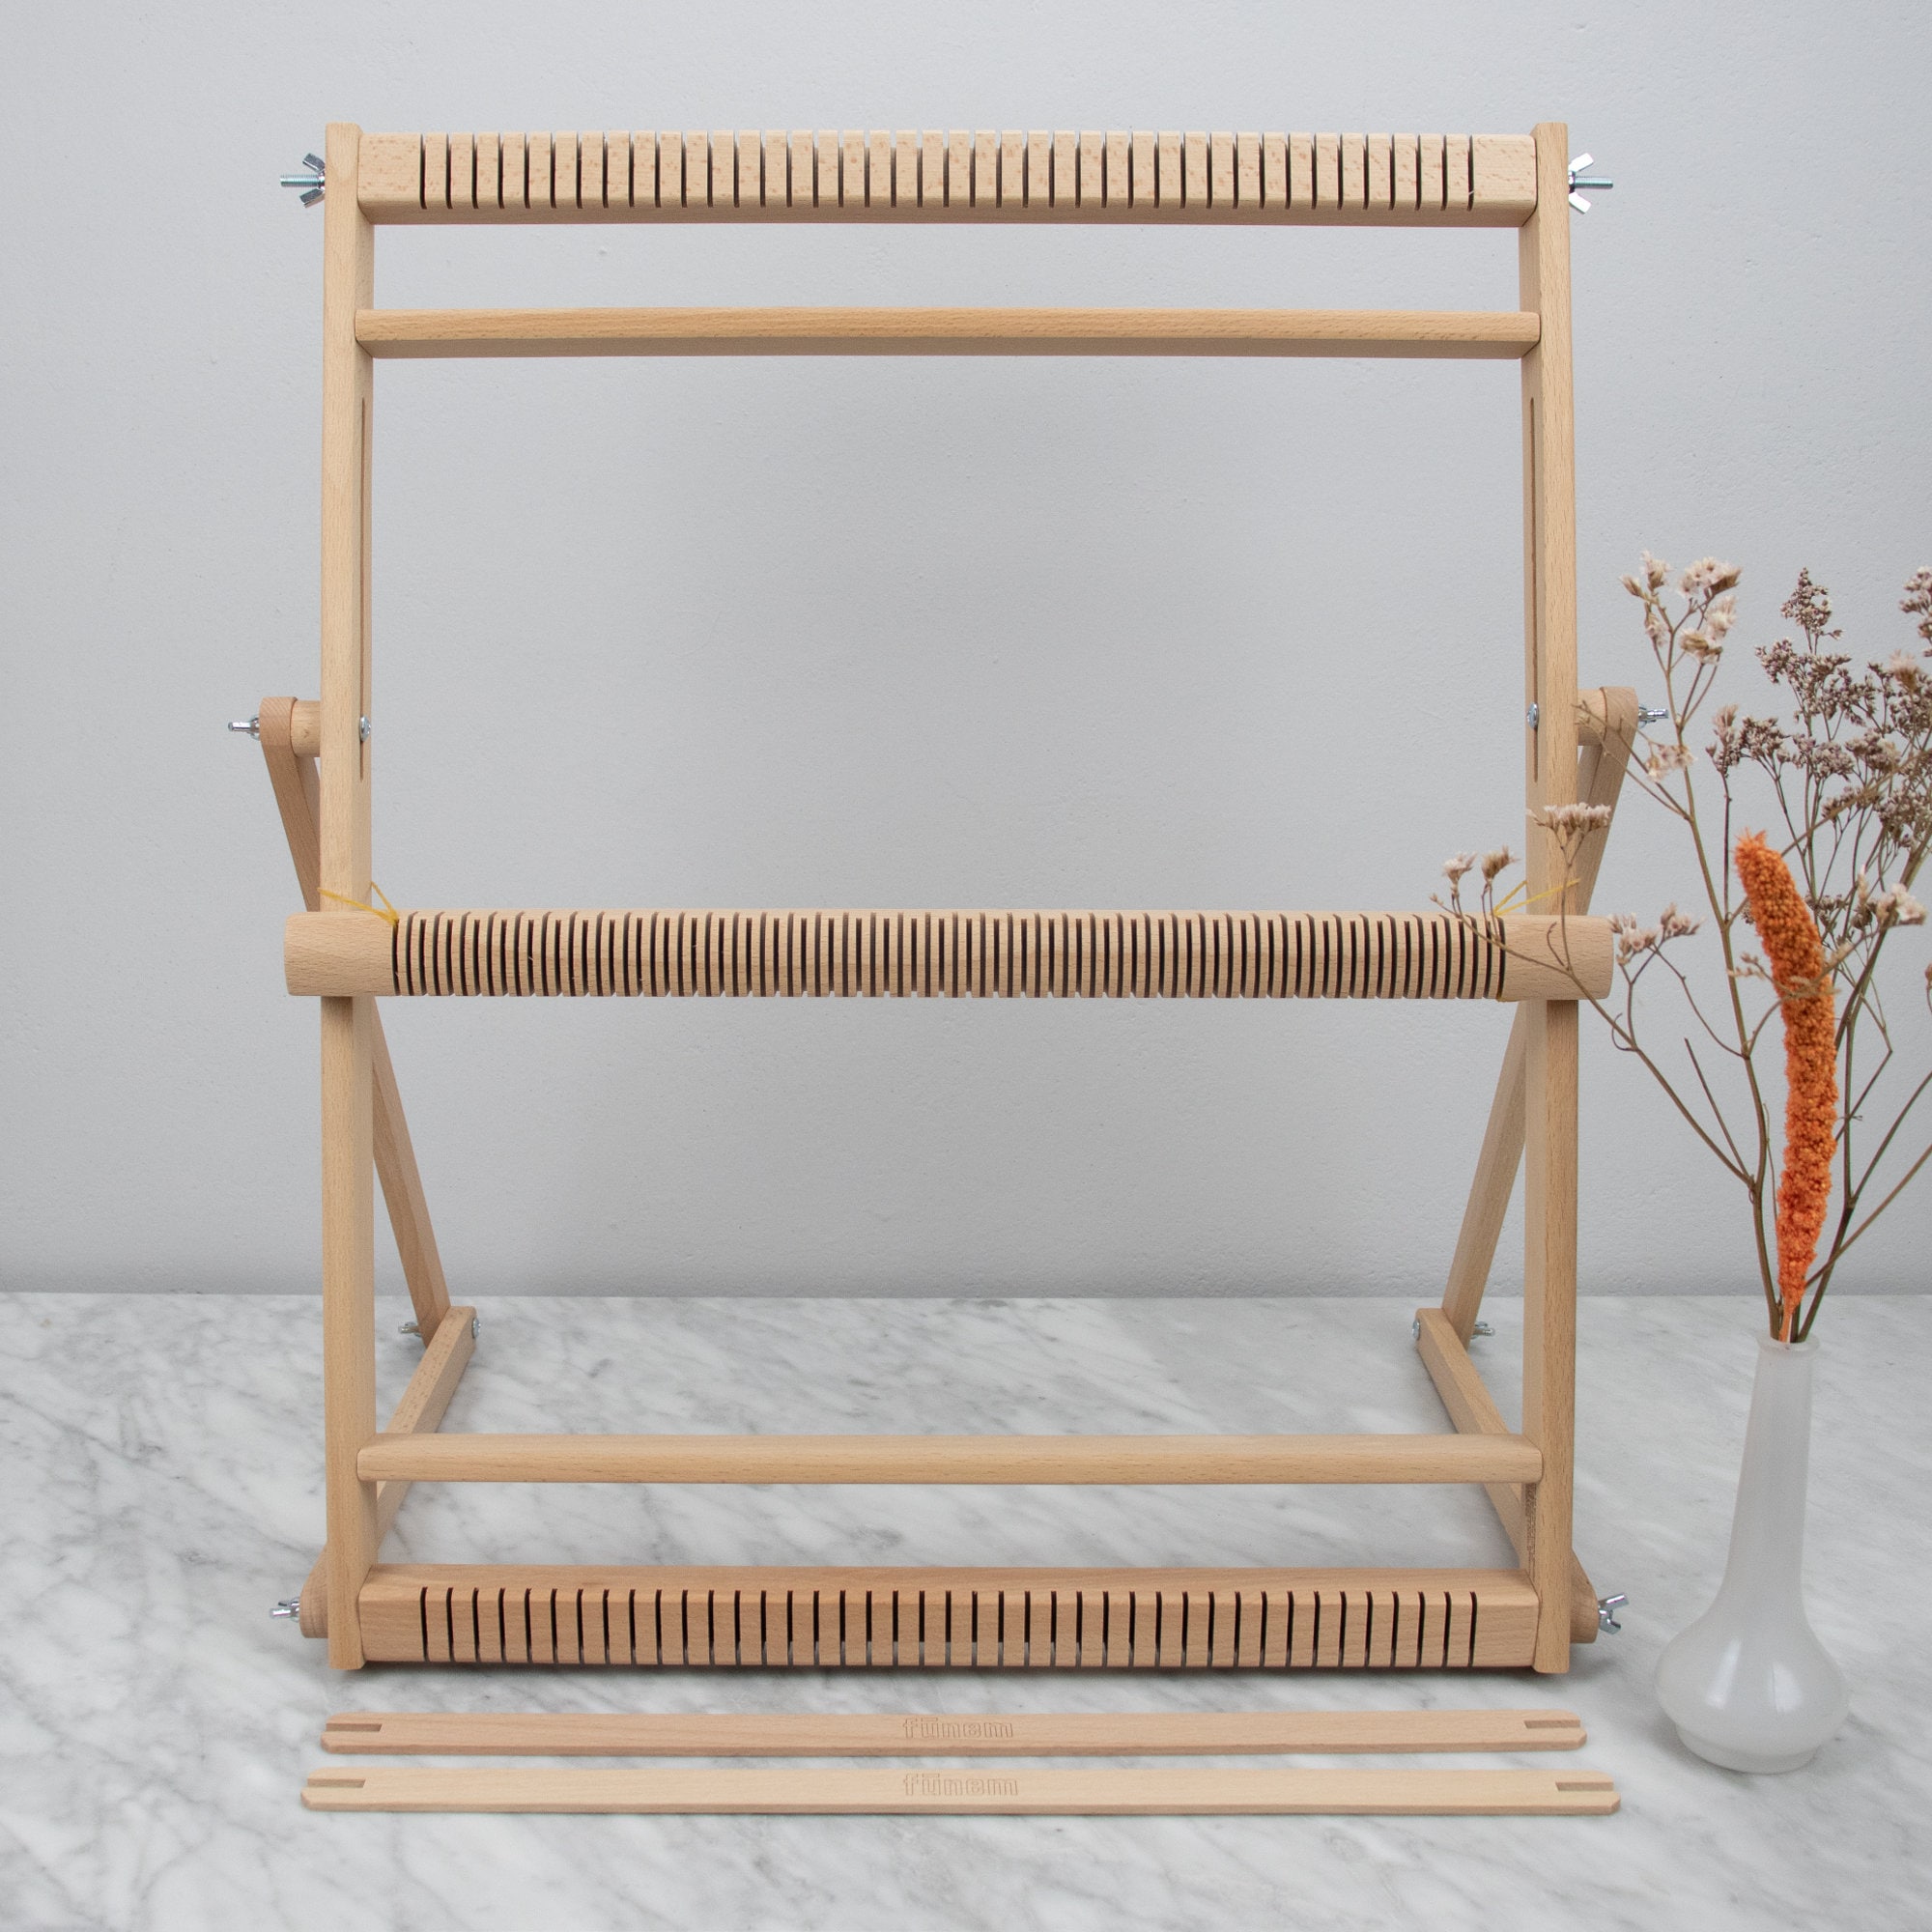 Mini Frame Loom for Diy.tapestry Loom for Beginners.loom for